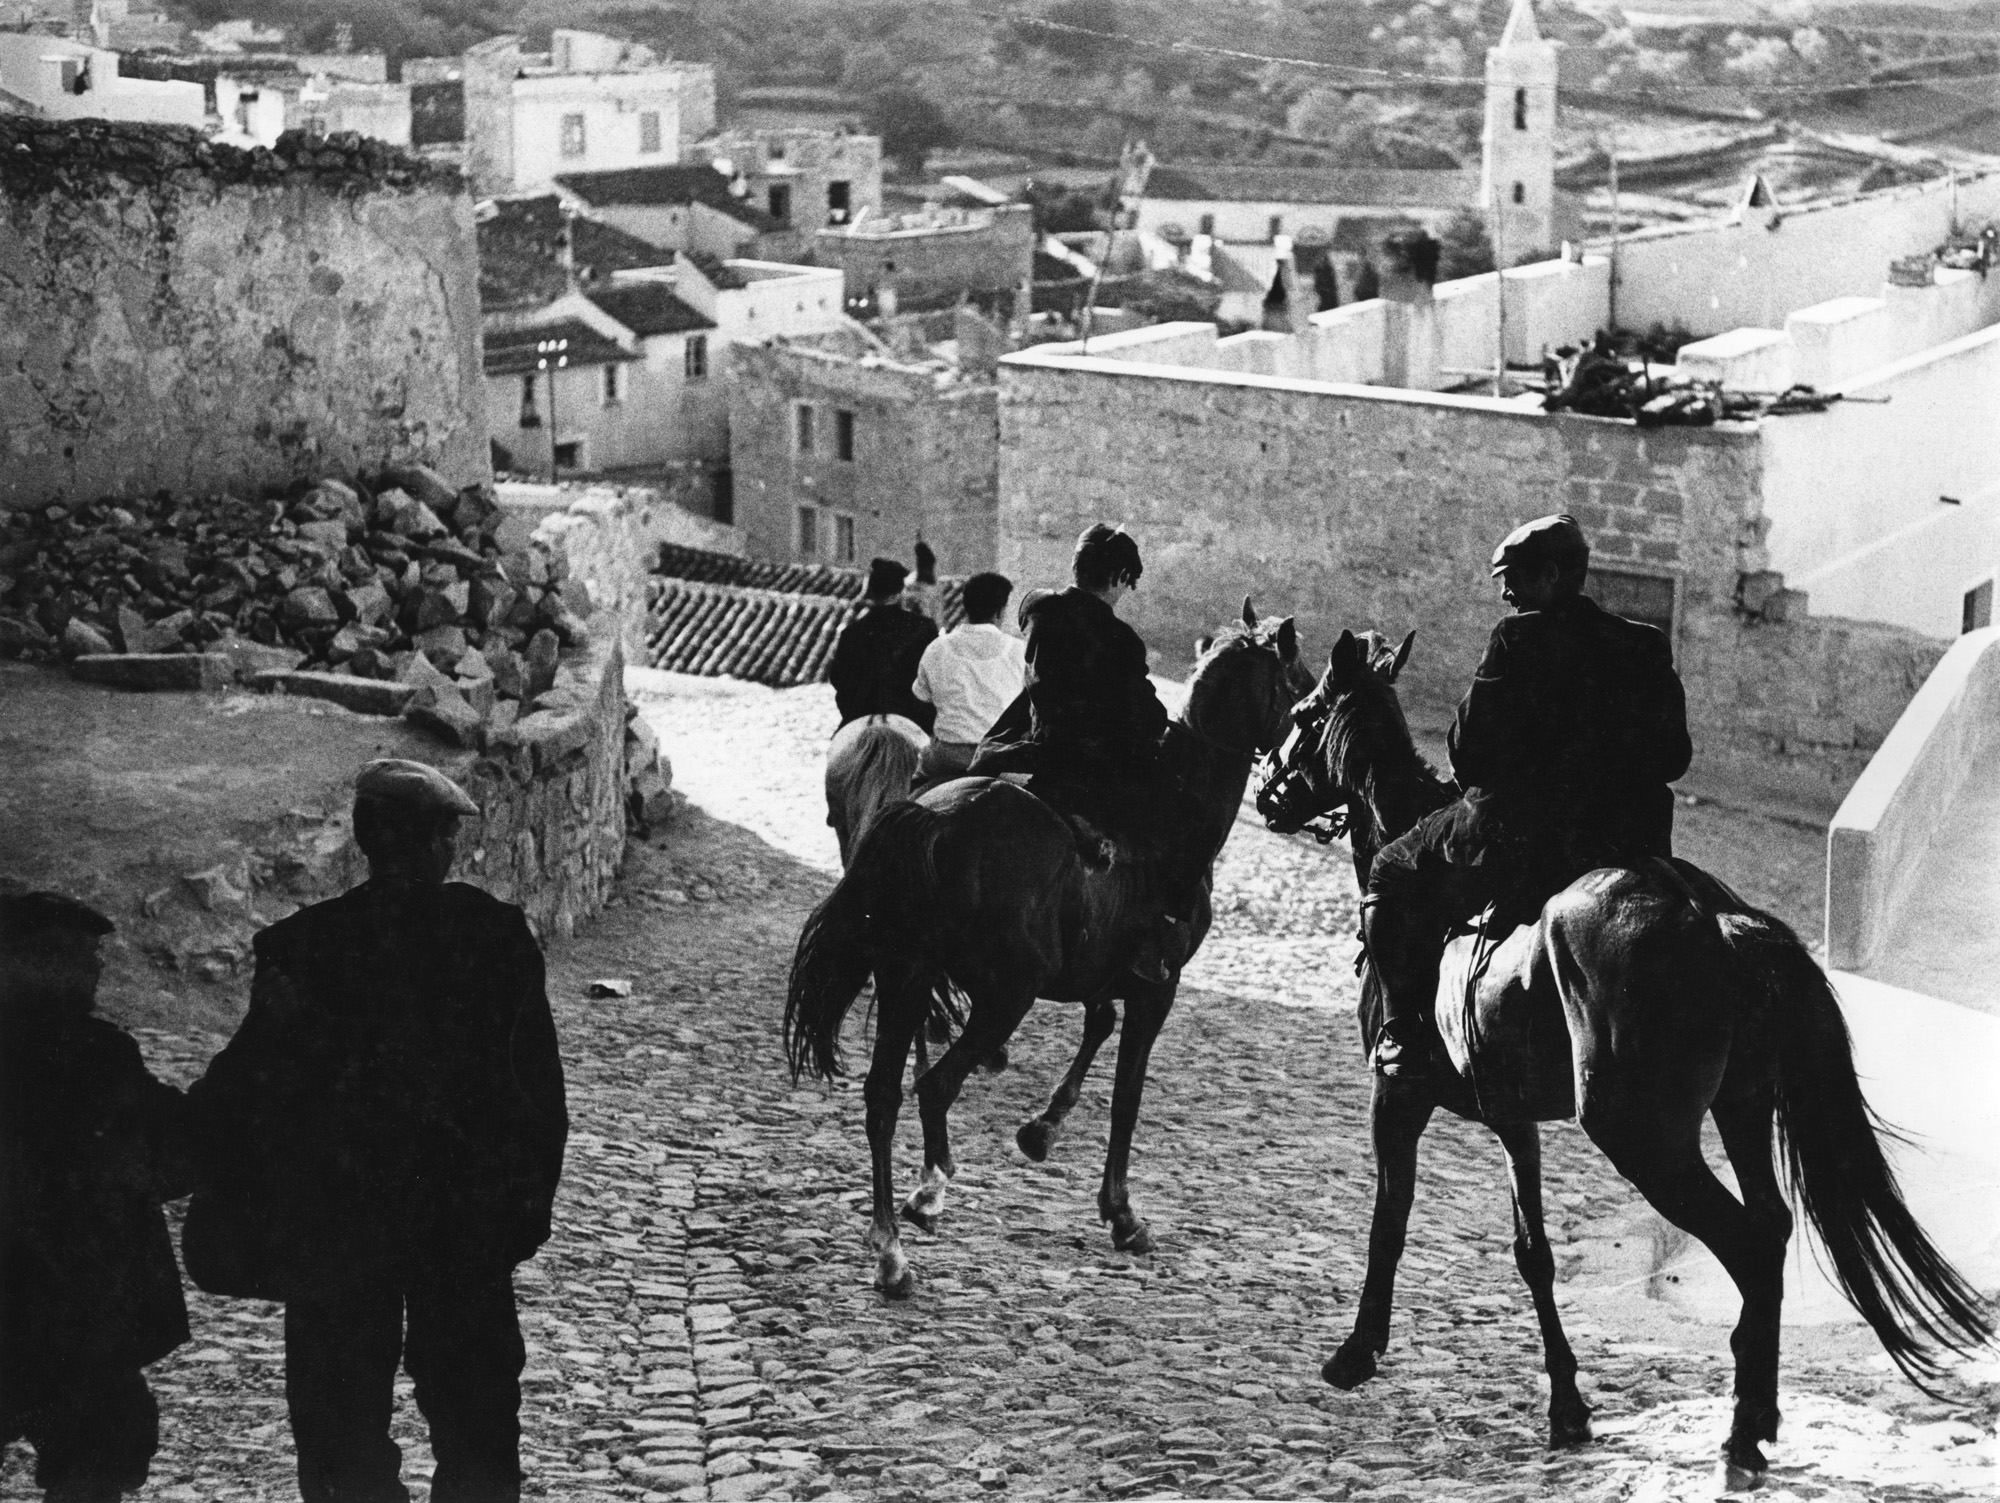 Lisetta Carmi, Sardegna, Orgosolo, La corsa dei cavalli, 1964 © Martini & Ronchetti Courtoisie Archivio Lisetta Carmi, Gênes